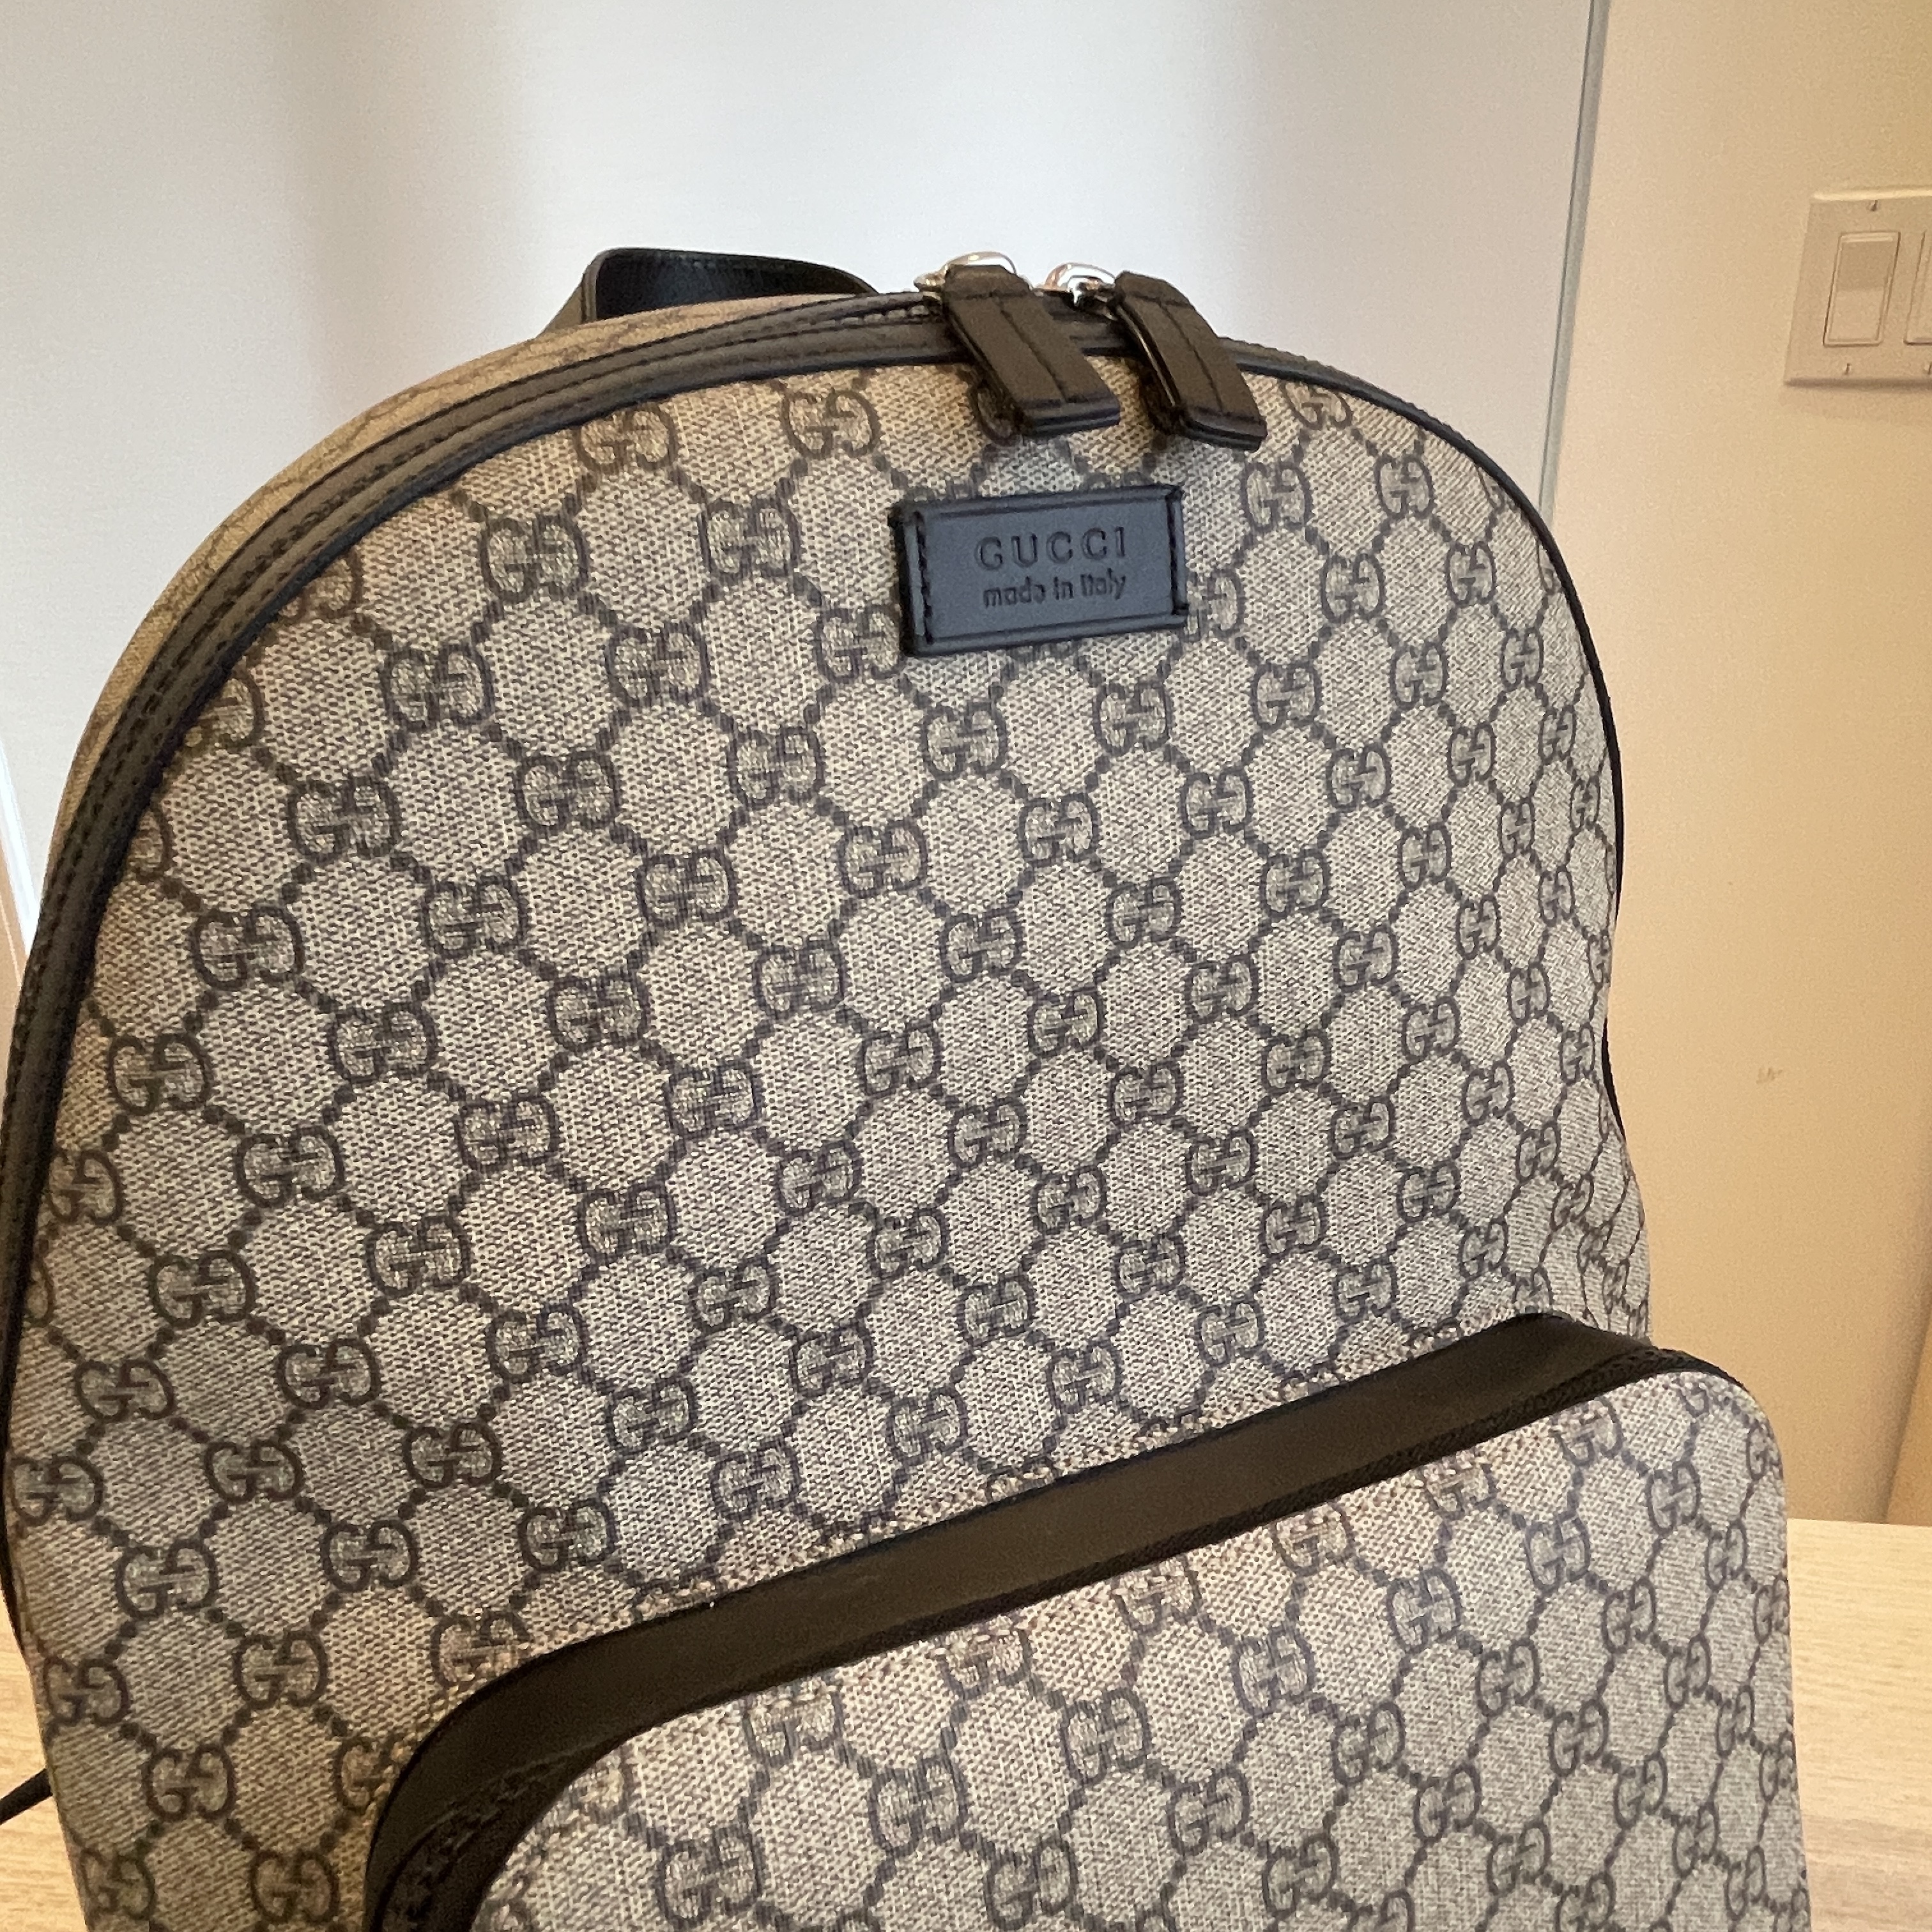 GG Supreme Monogram Medium Gucci Backpack for Sale in Mesa